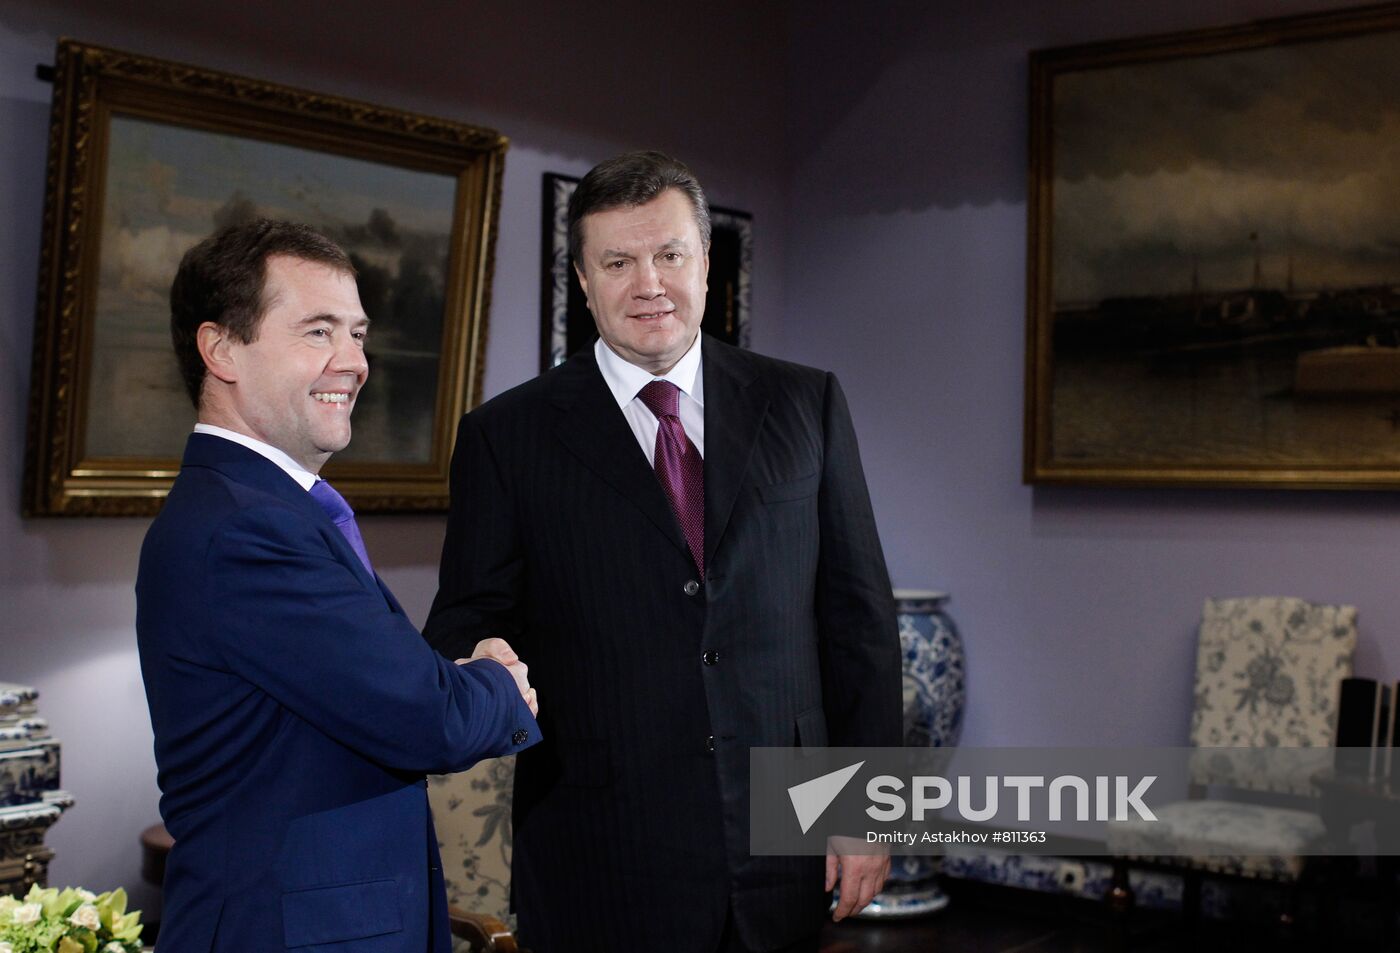 Dmitry Medvedev meets Viktor Yanukovich